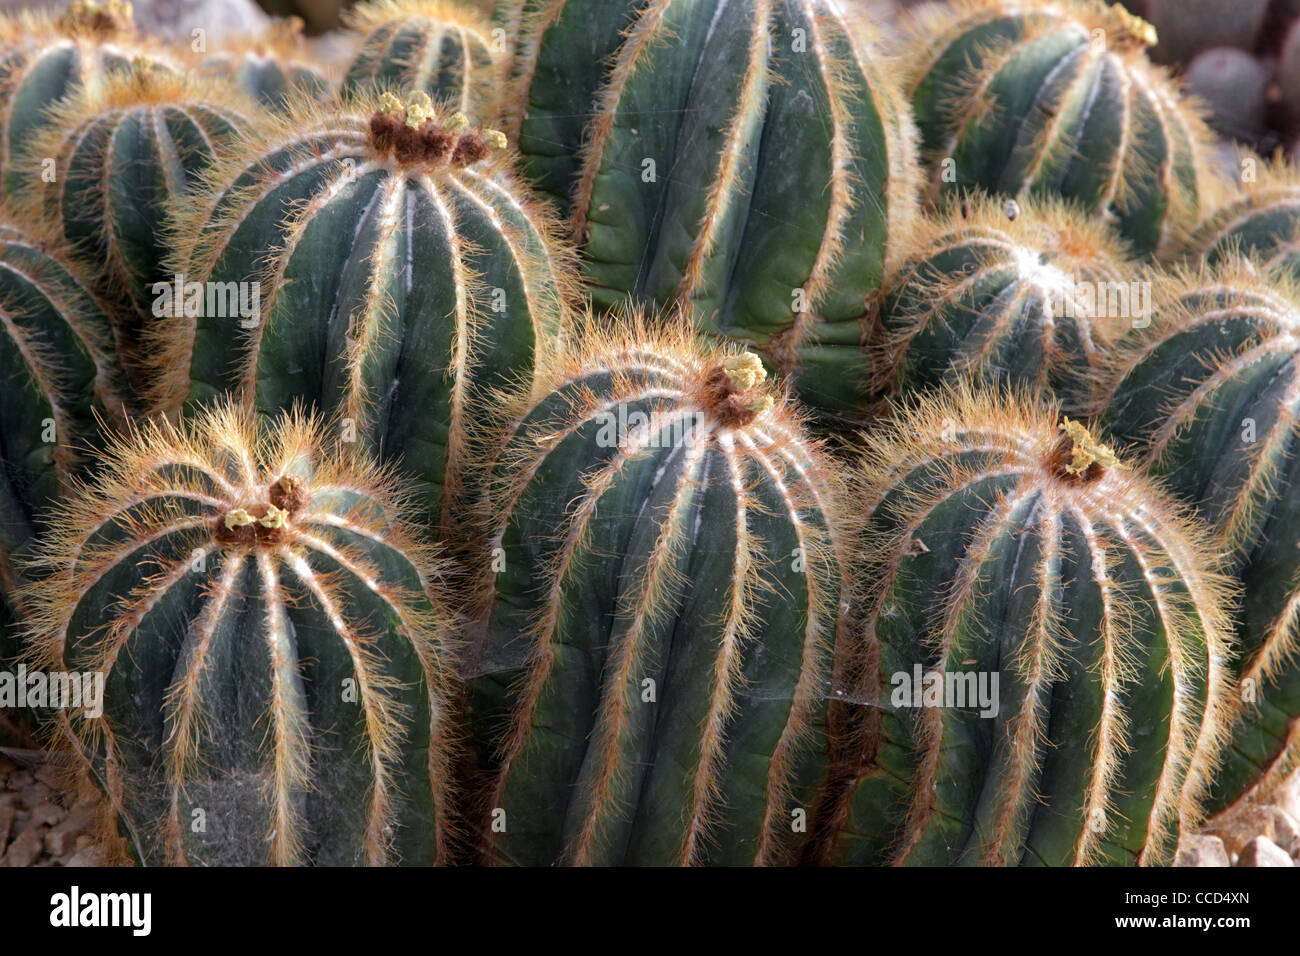 Parodia Magnifica cactus plants Stock Photo